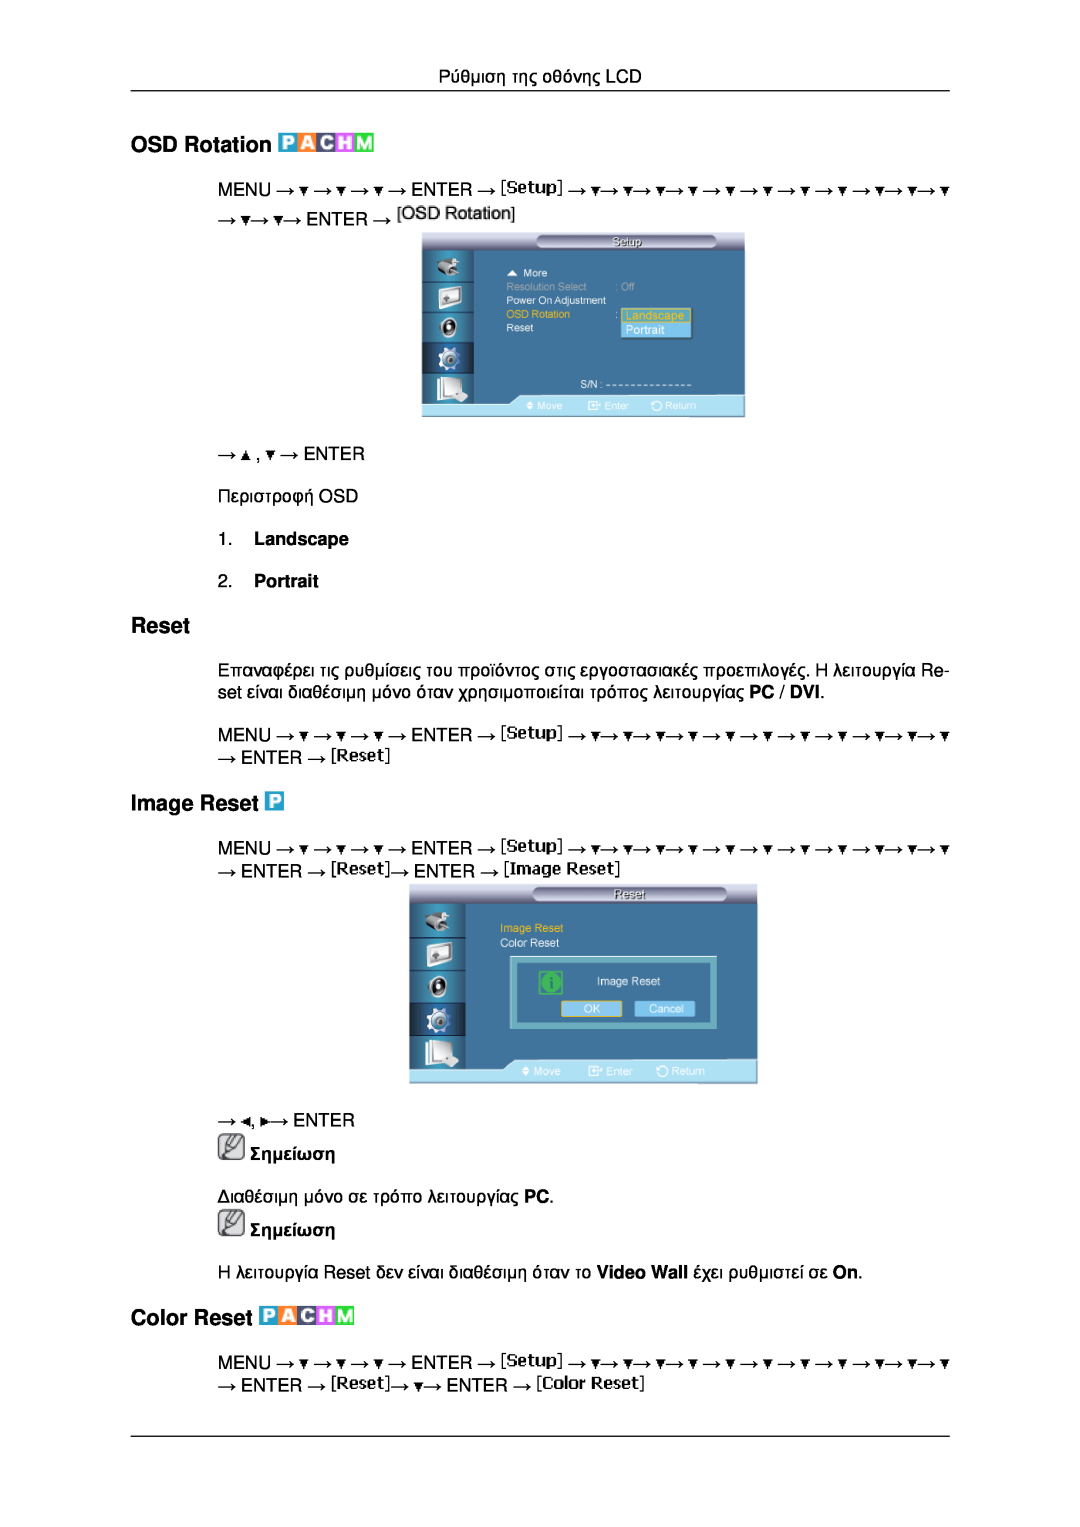 Samsung LH46MRPLBF/EN, LH40MRTLBC/EN manual OSD Rotation, Image Reset, Color Reset, Landscape 2. Portrait, Σημείωση 